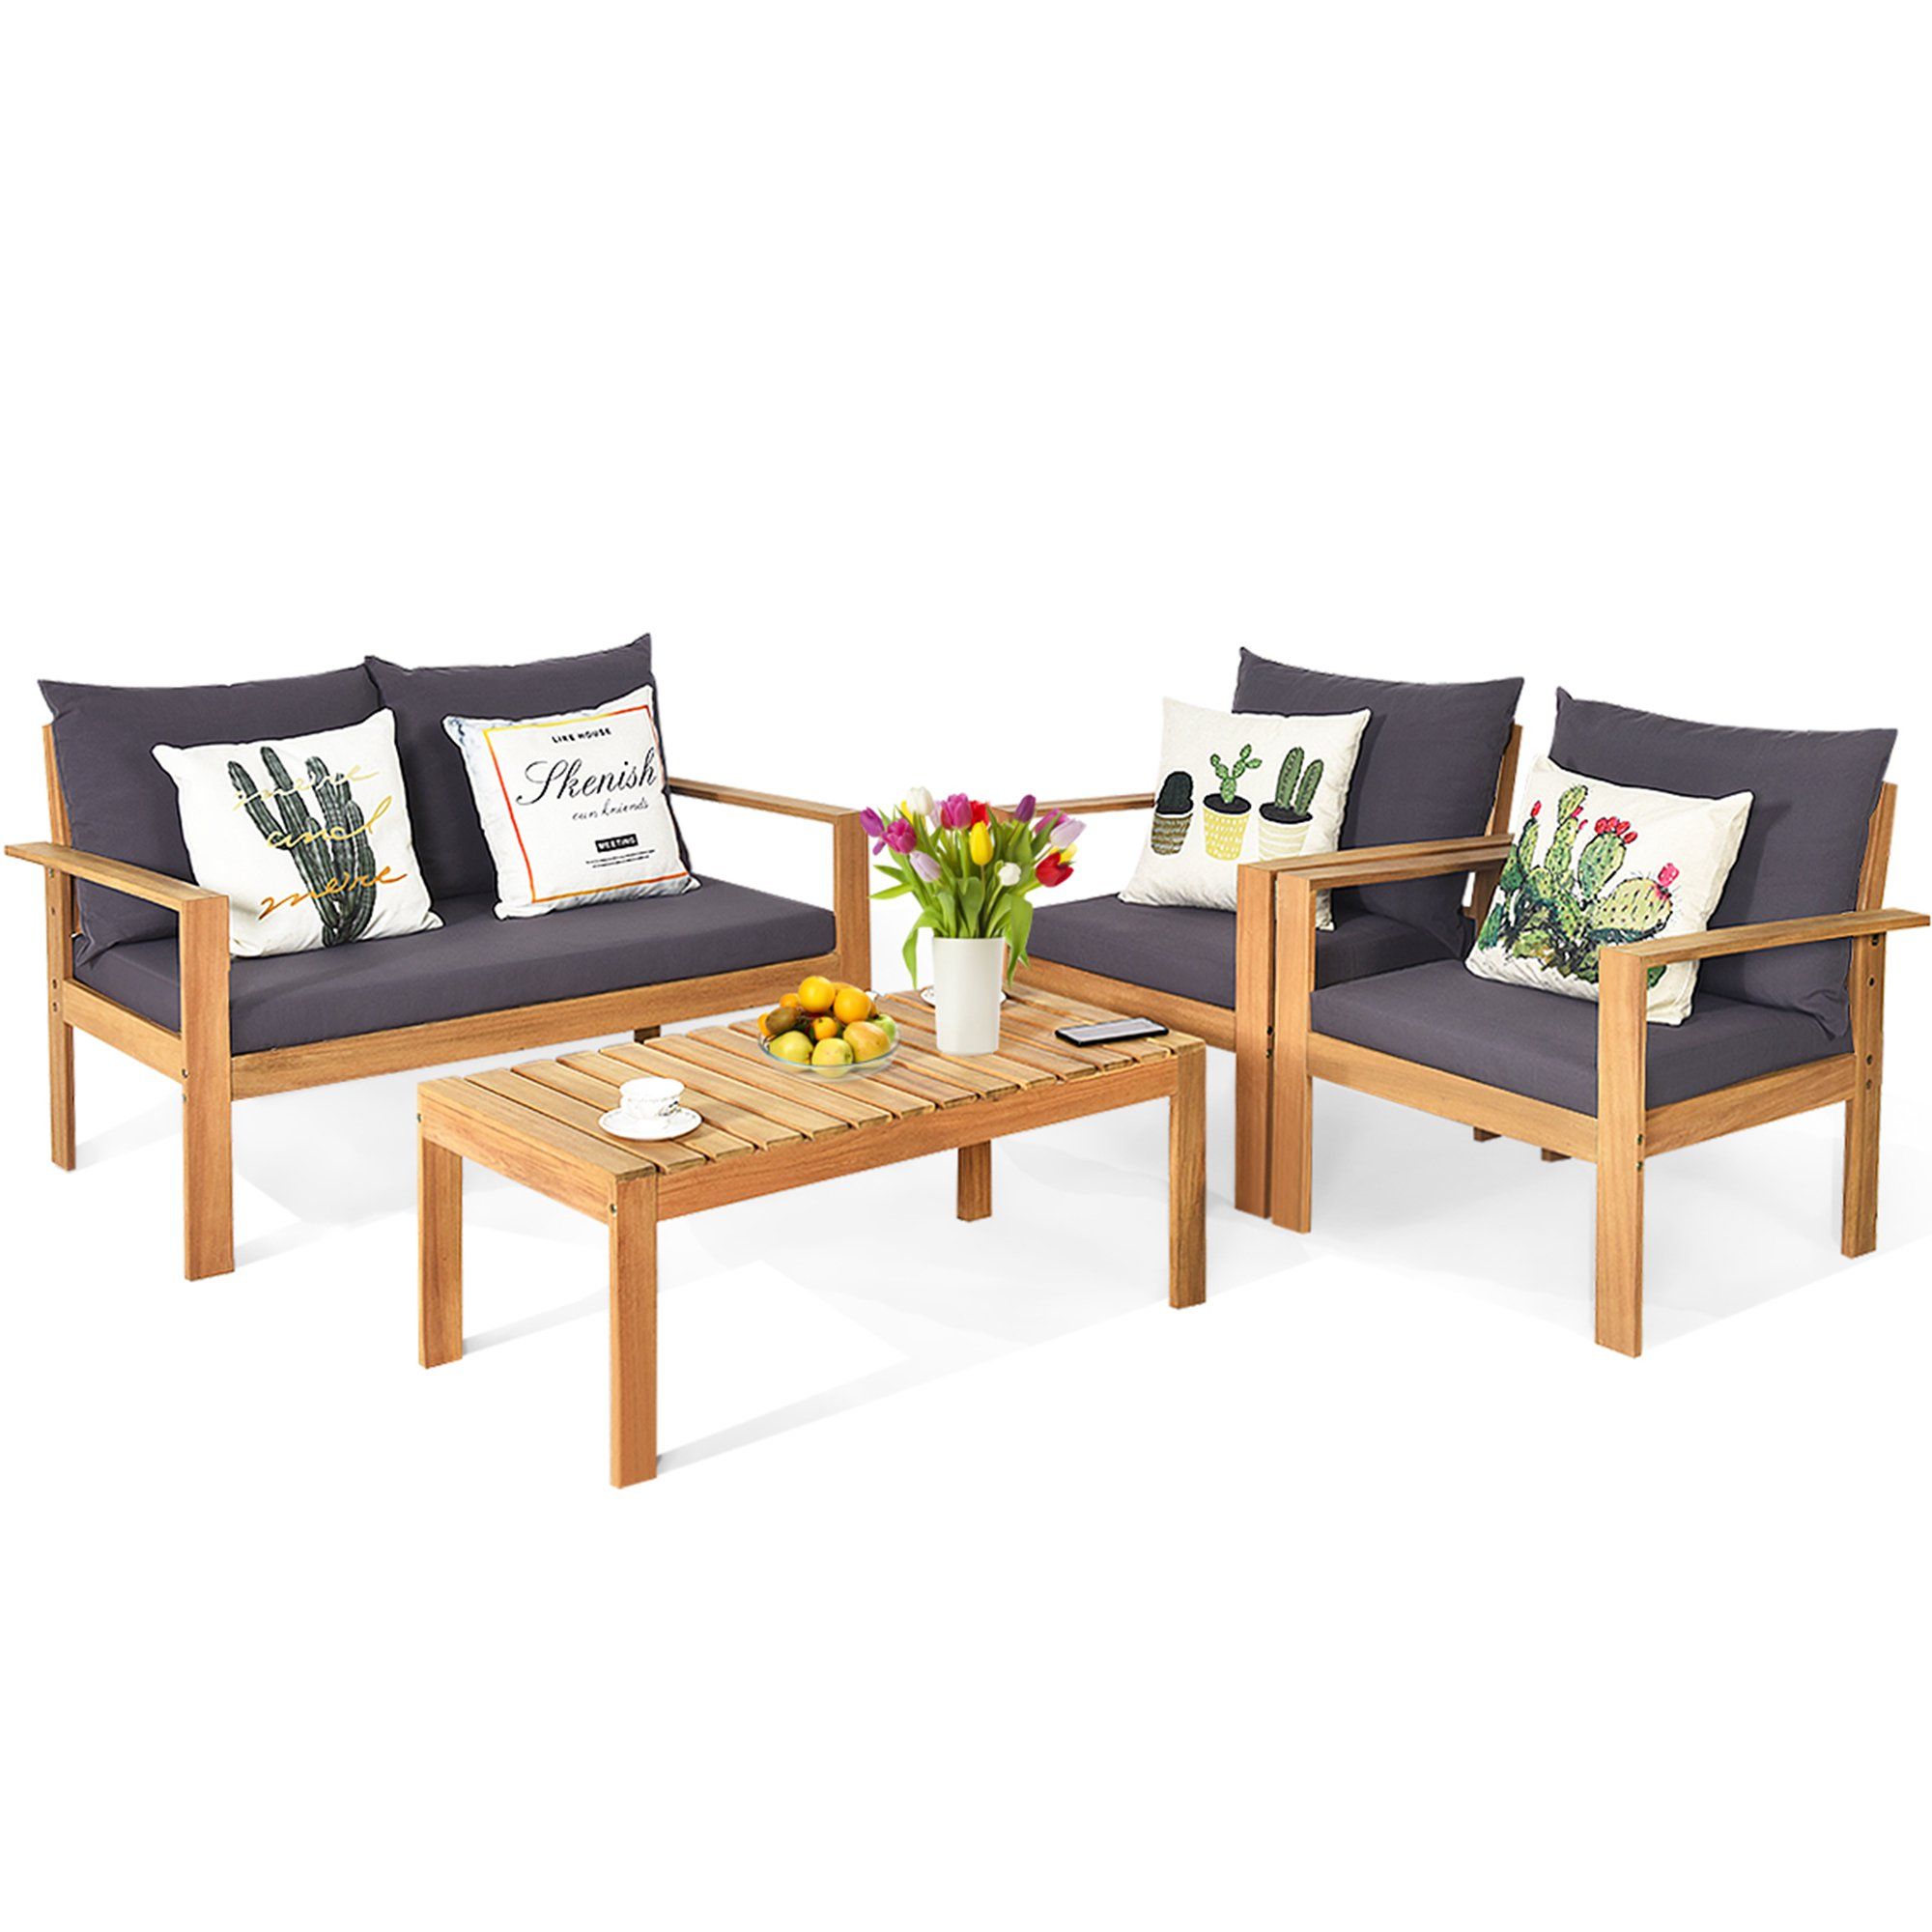 Topbuy 4 PCS Outdoor Acacia Wood Conversation Sofa Table Furniture Set W/ Grey Cushions | Walmart (US)